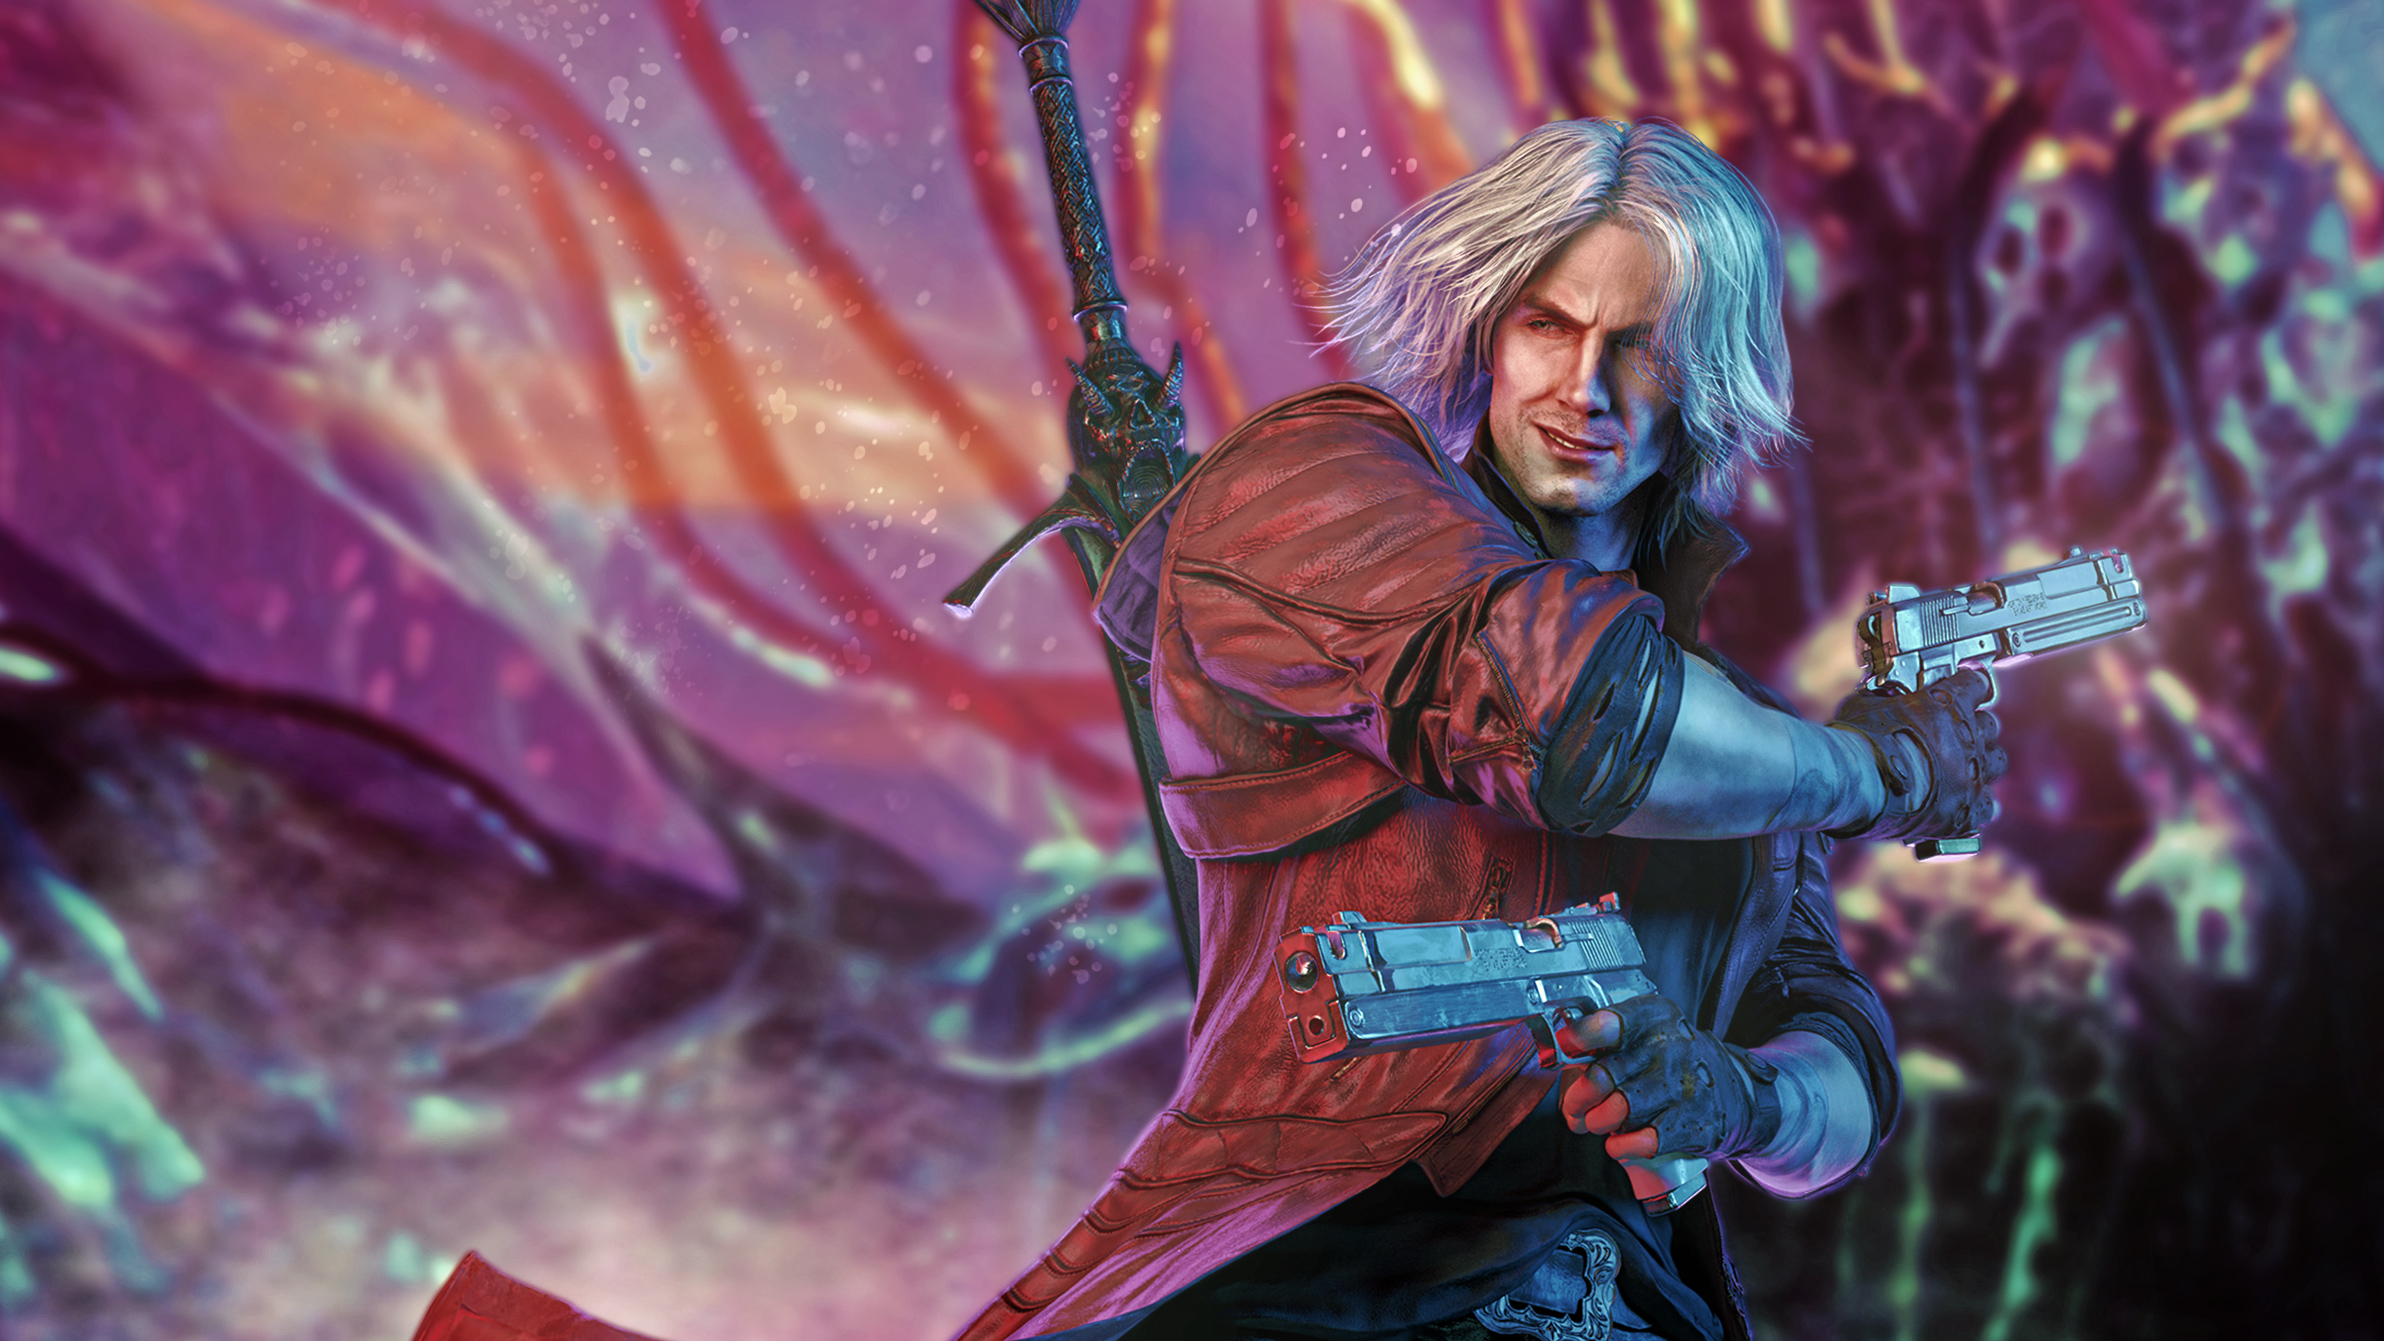 Dante - Devil May Cry Wallpaper - Games HD Wallpapers